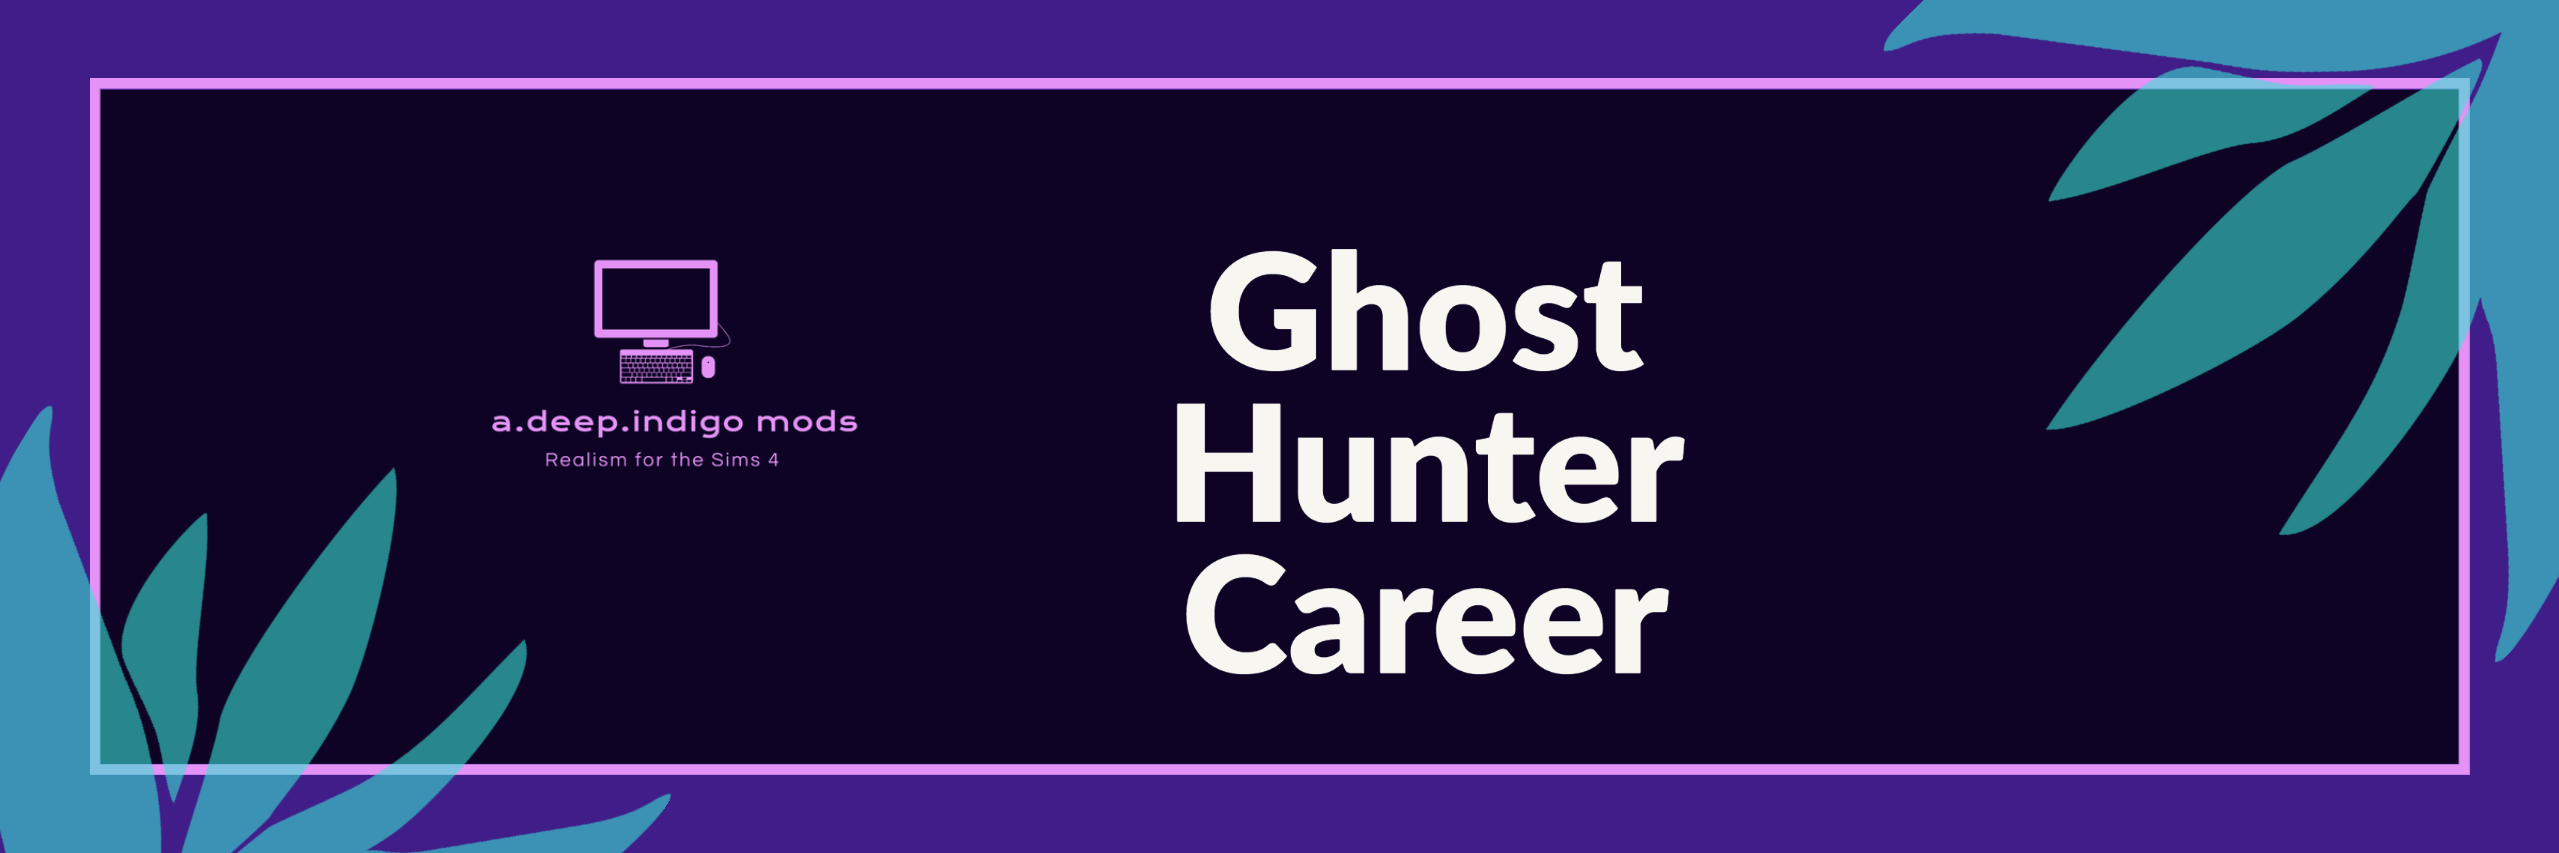 Ghost Hunter Career